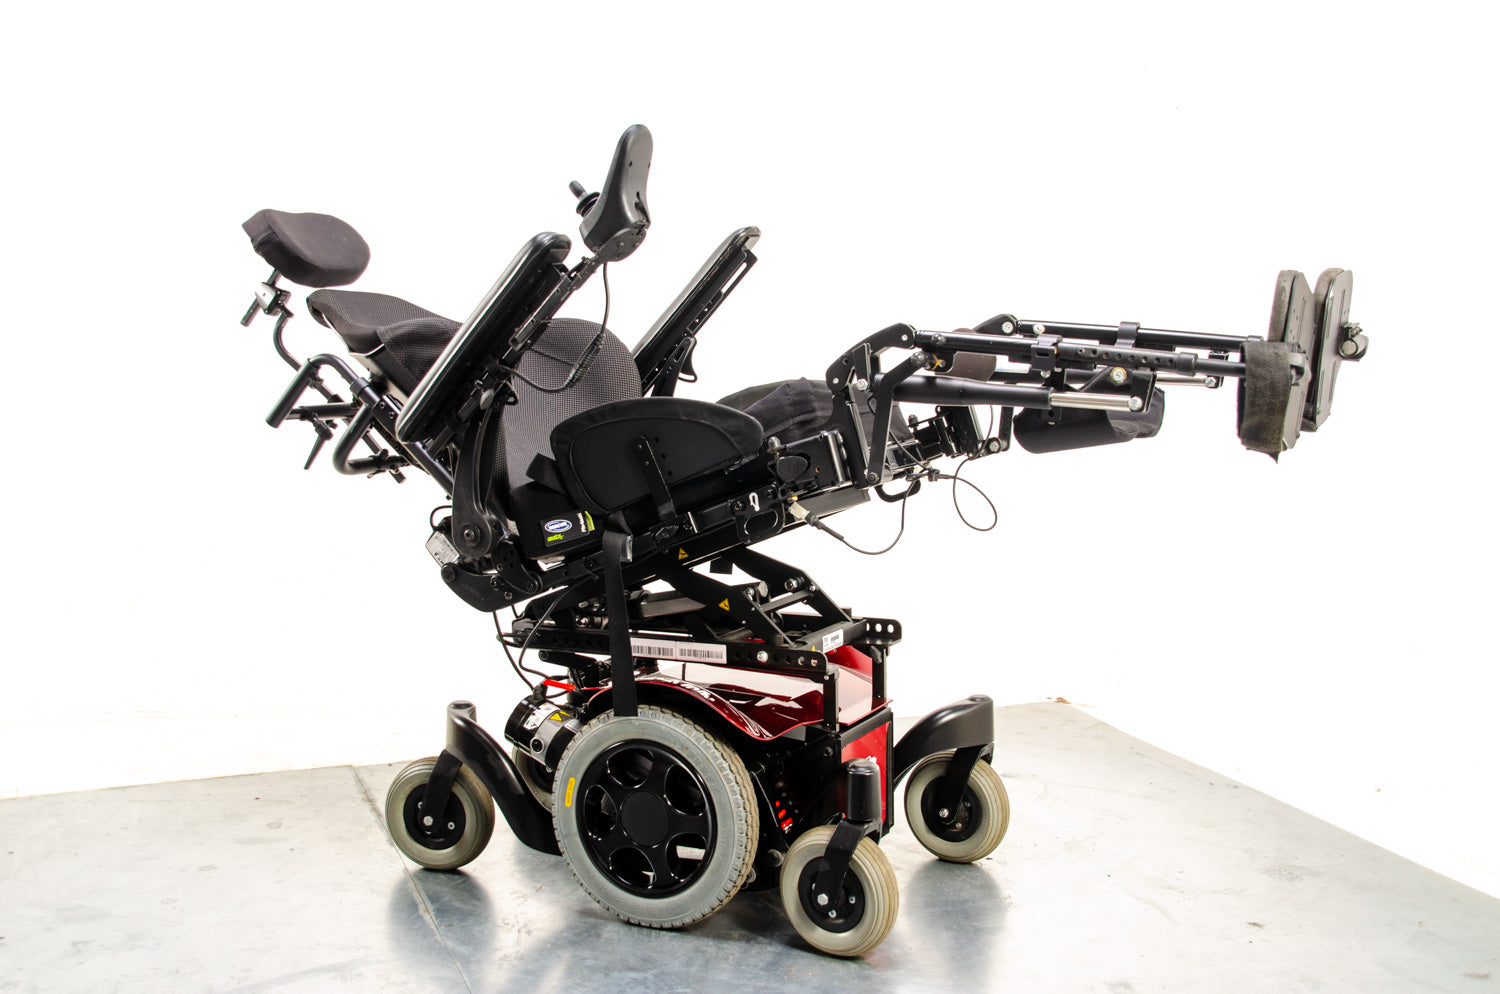 Quickie Salsa M2 Mini Used Electric Wheelchair Powerchair Recline Tilt Leg Raisers Powered Sunrise Medical Red